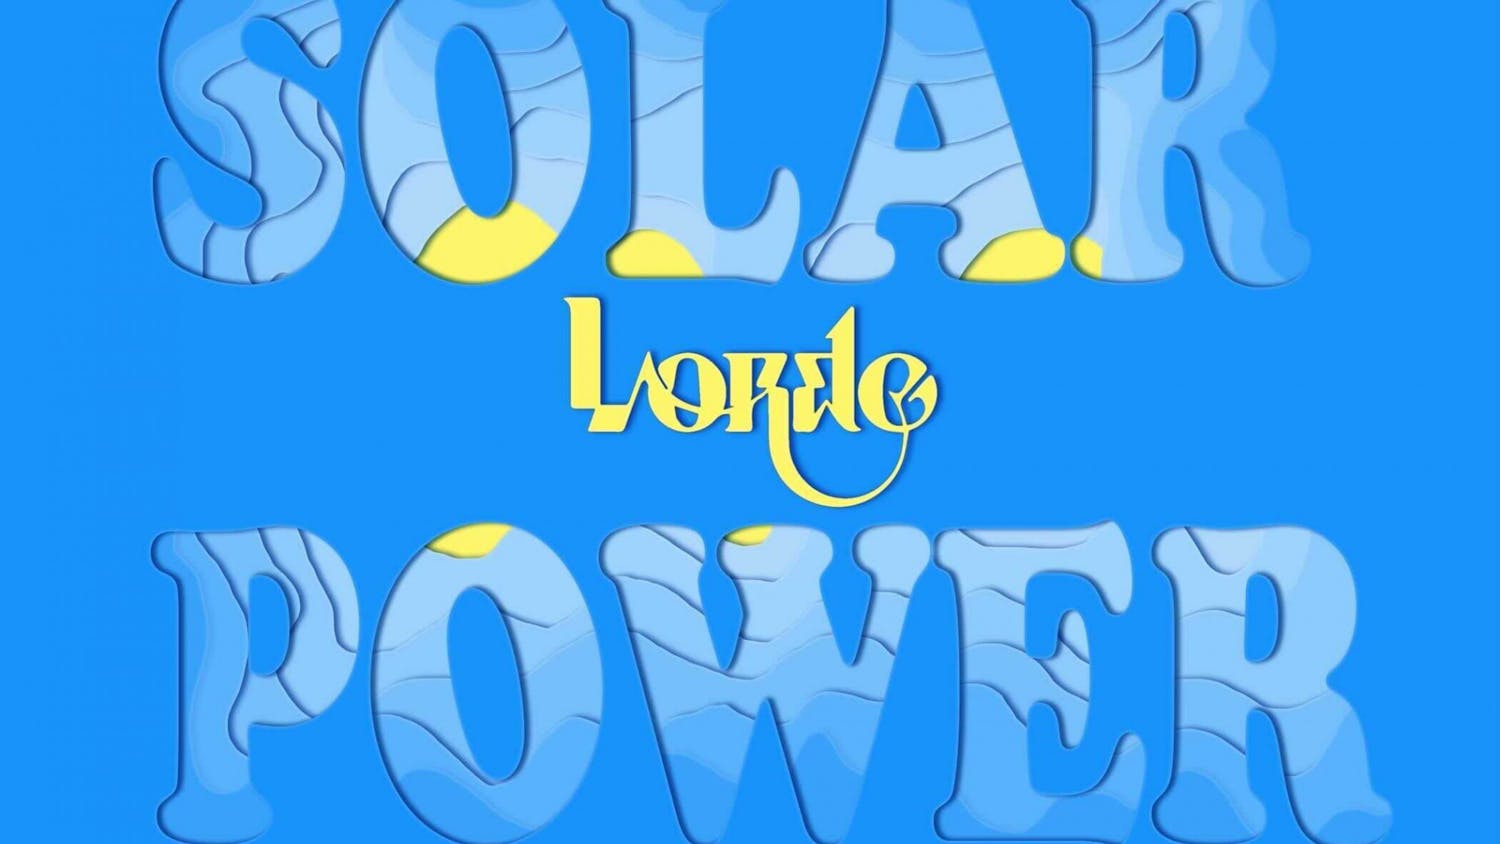 Lorde Solar Power.jpg